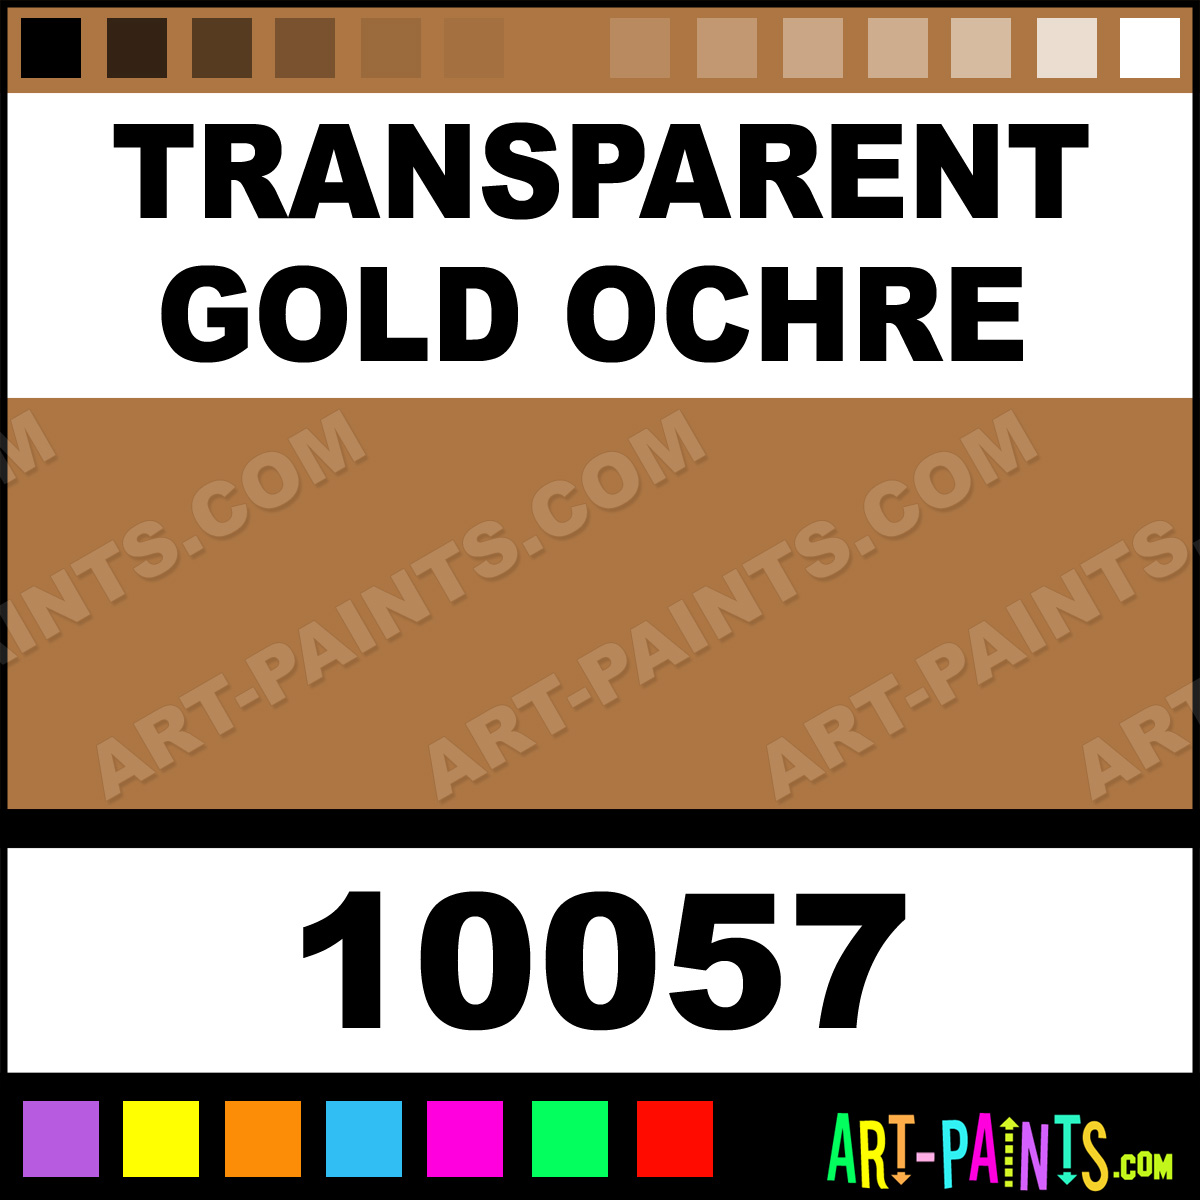 Transparent-Gold-Ochre-lg.jpg